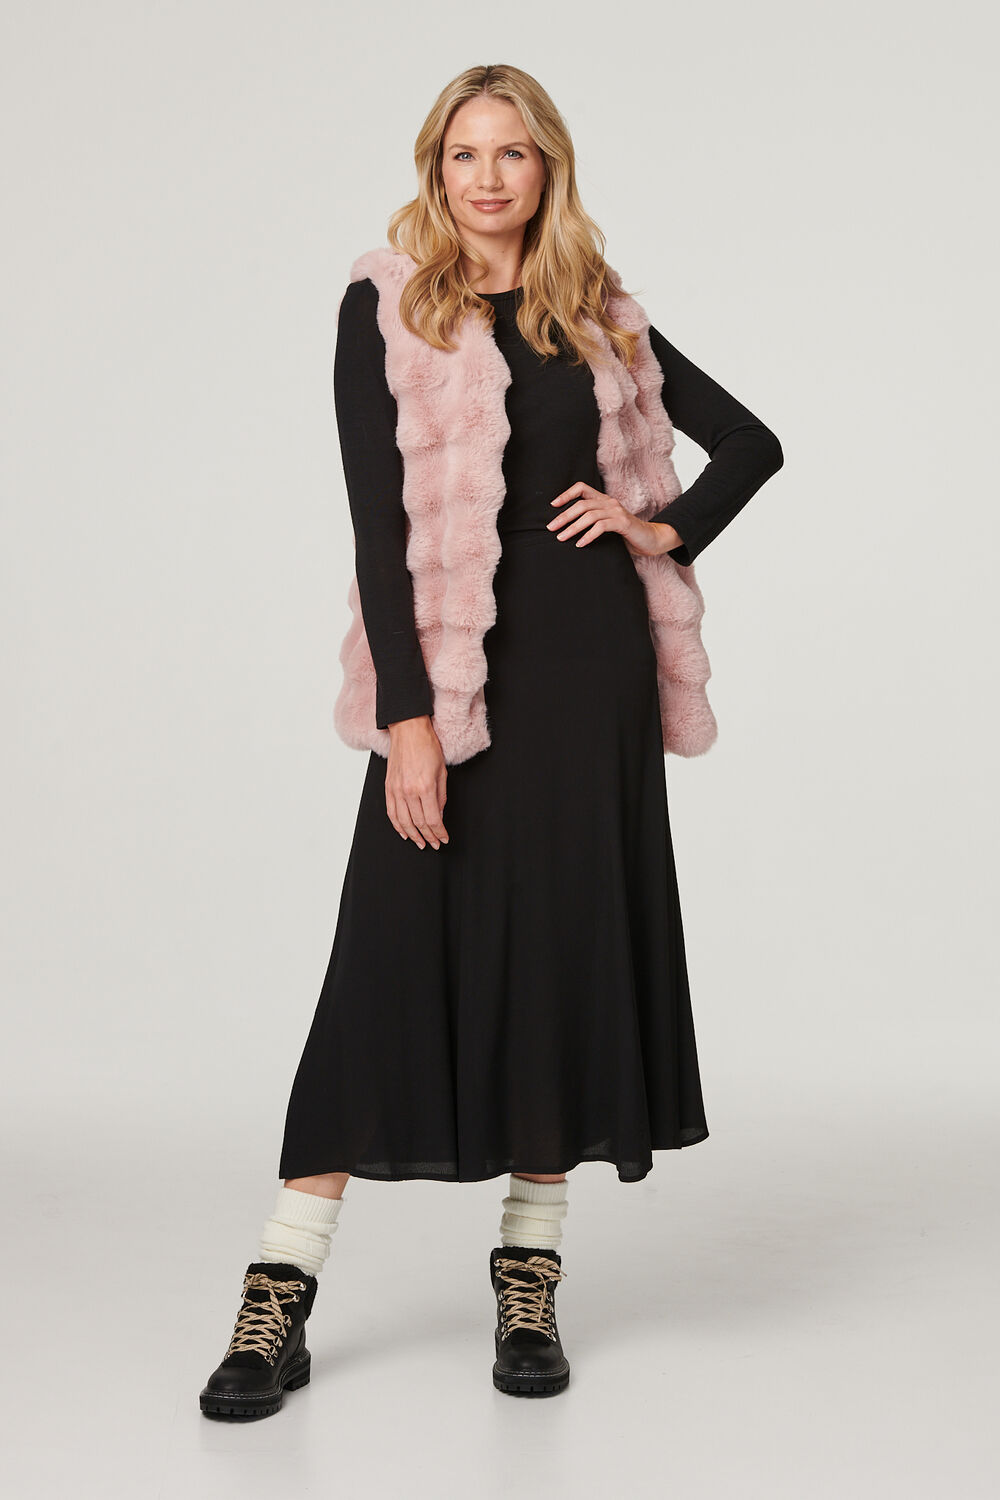 Izabel London Pink - Faux Fur Open Front Longline Gilet, Size: L